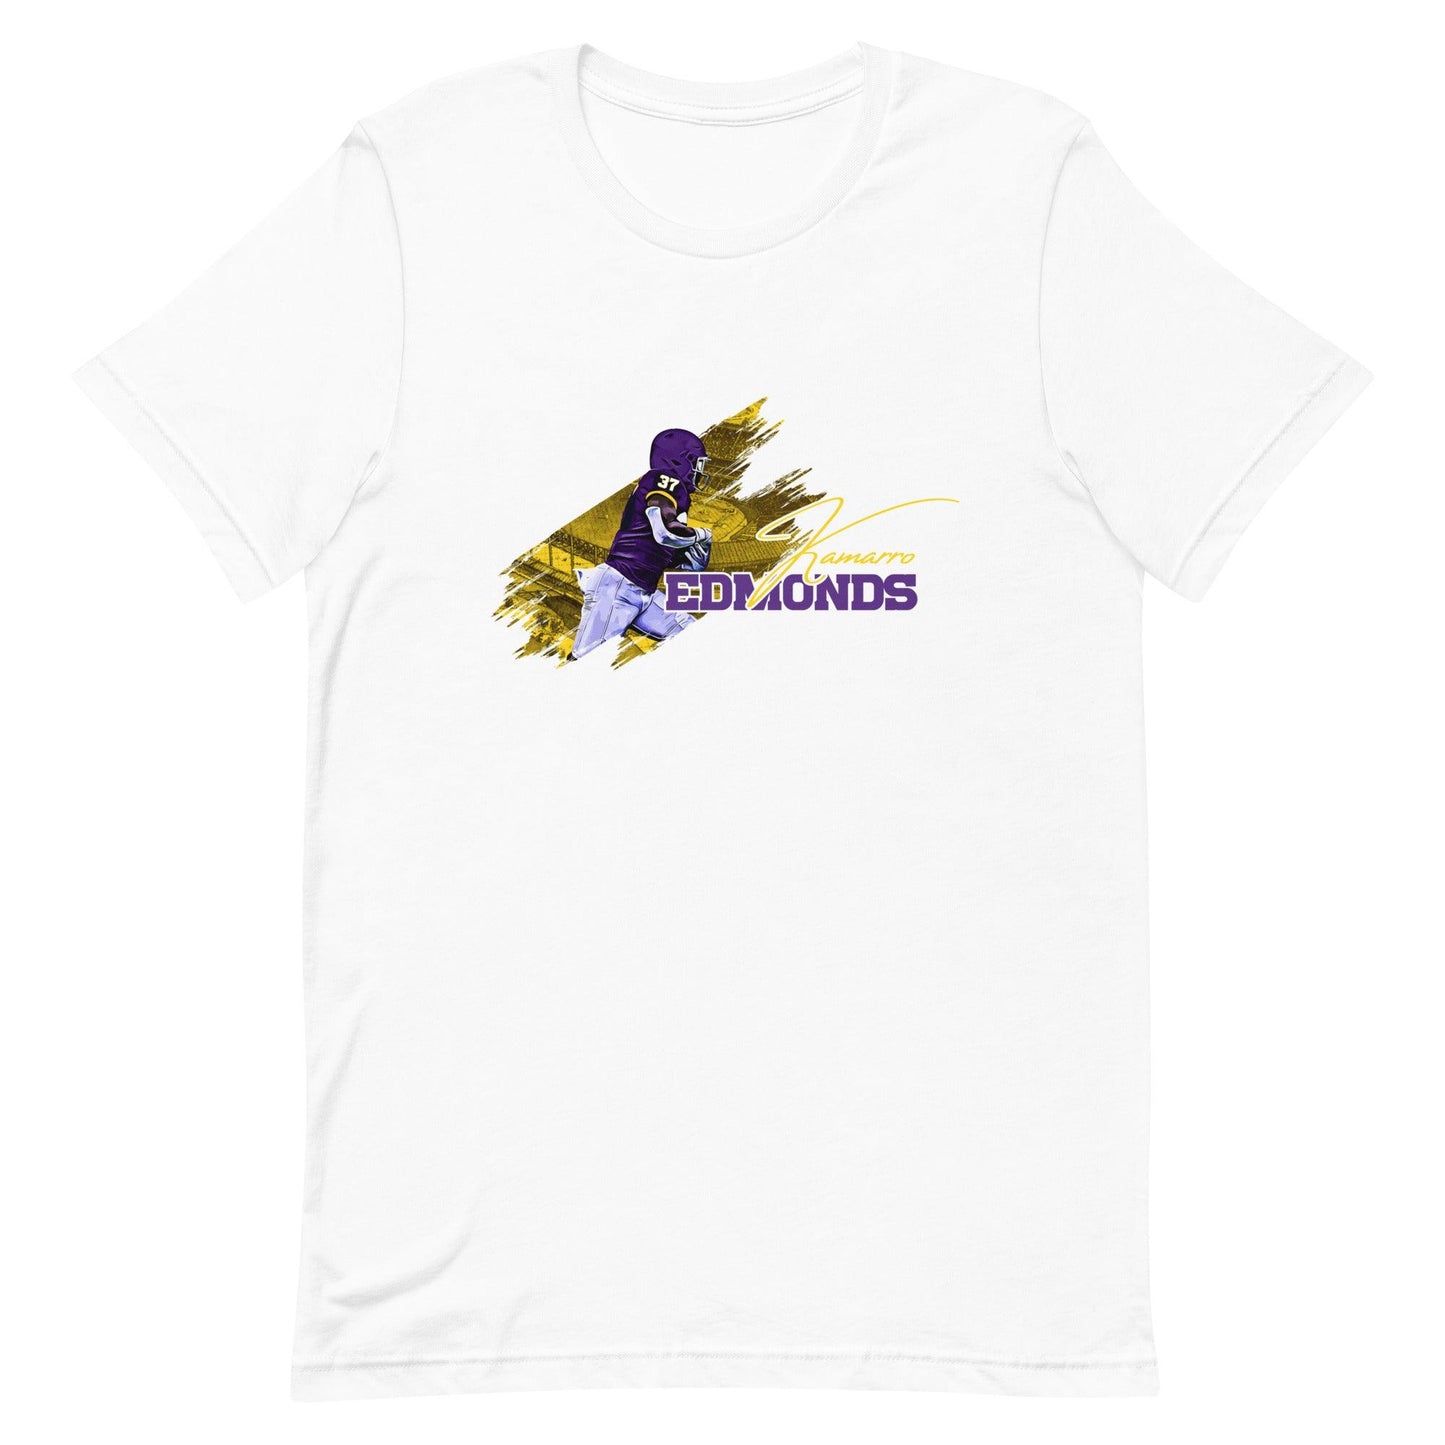 Kamarro Edmonds "Gameday" t-shirt - Fan Arch